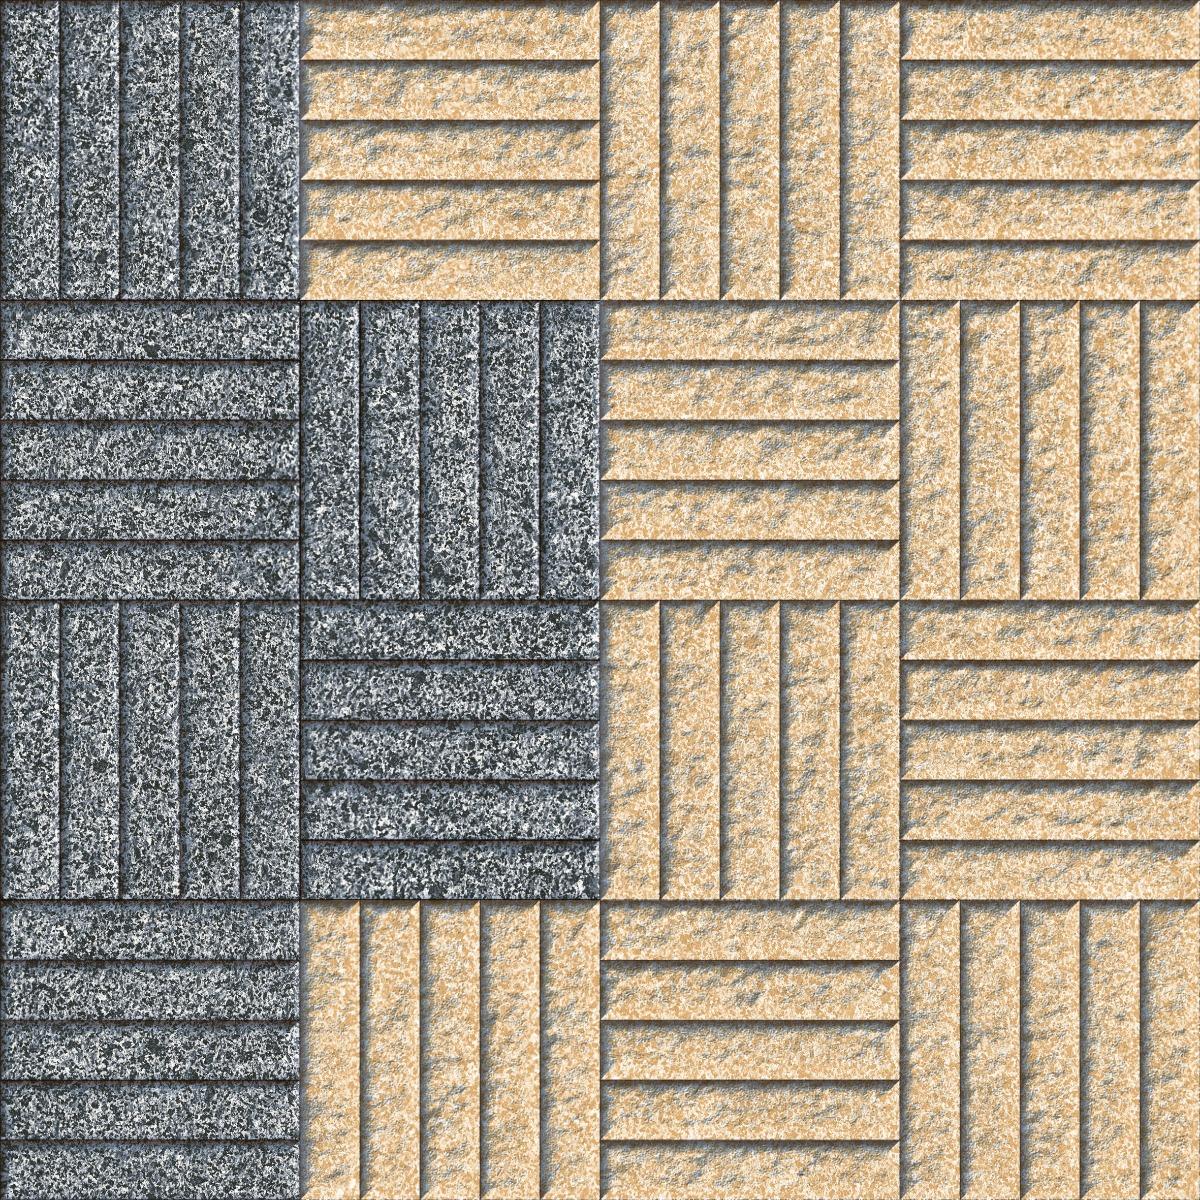 Cream Tiles for Commercial Tiles, Parking Tiles, Office Tiles, Pathway Tiles, Hospital Tiles, High Traffic Tiles, Bar/Restaurant, Outdoor Area, Porch/Parking